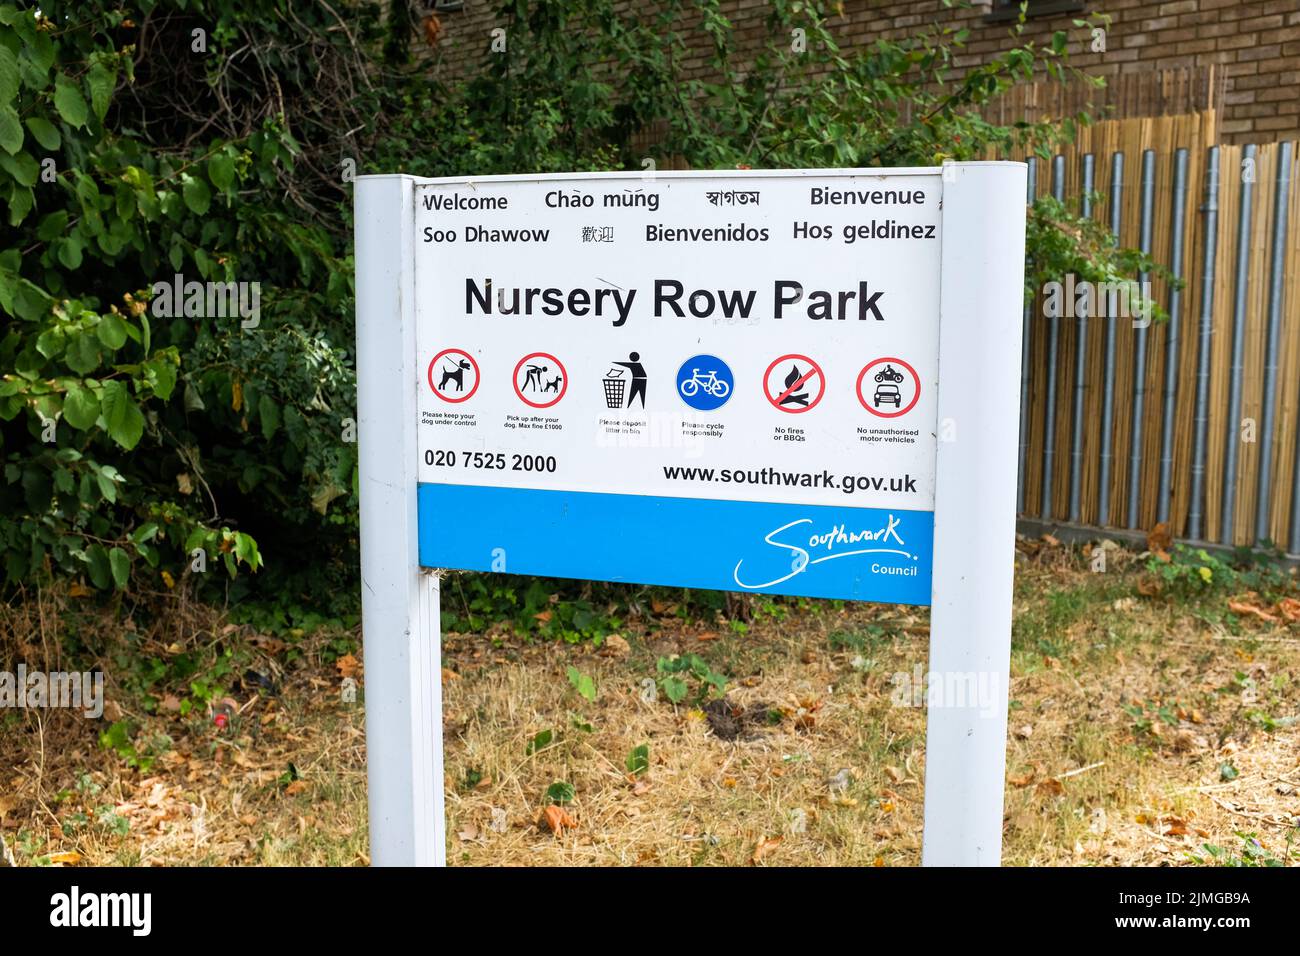 A sign for Nursery Row Park in Southwark, south London, England. Stock Photo